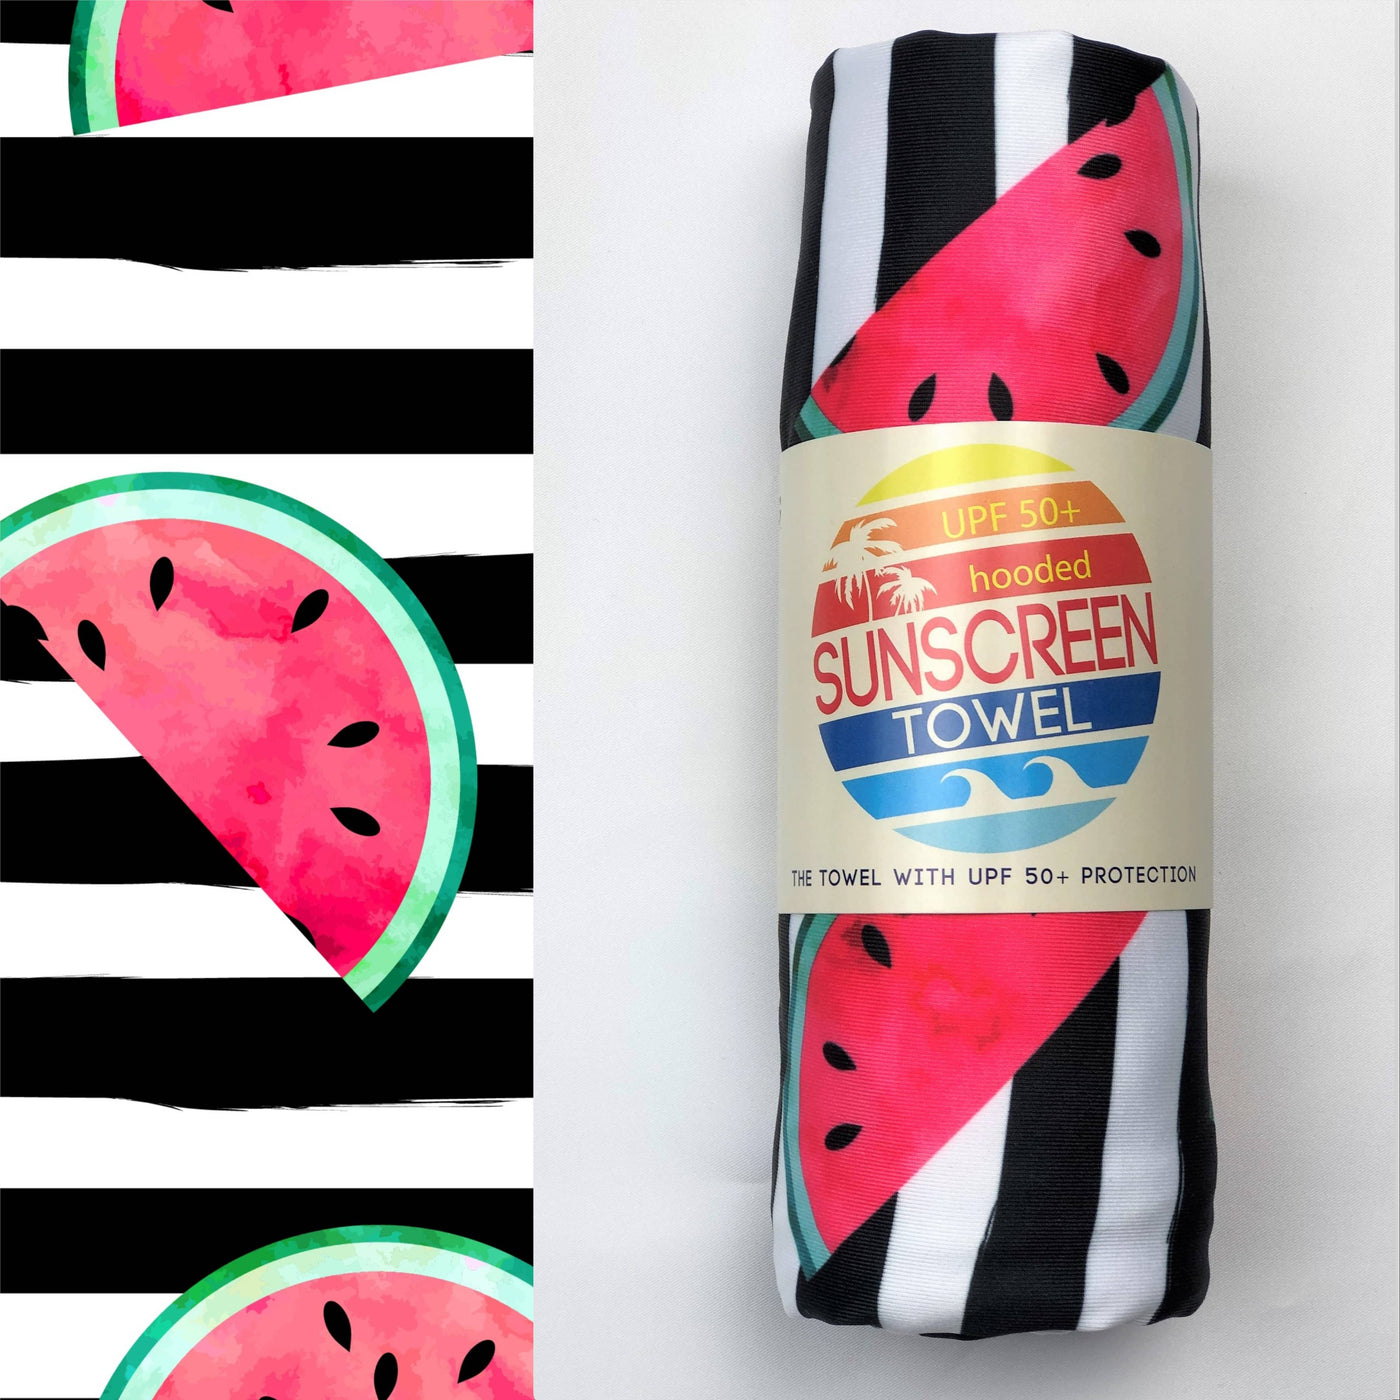 Hooded UPF 50+ Sunscreen Towel (Watermelon)